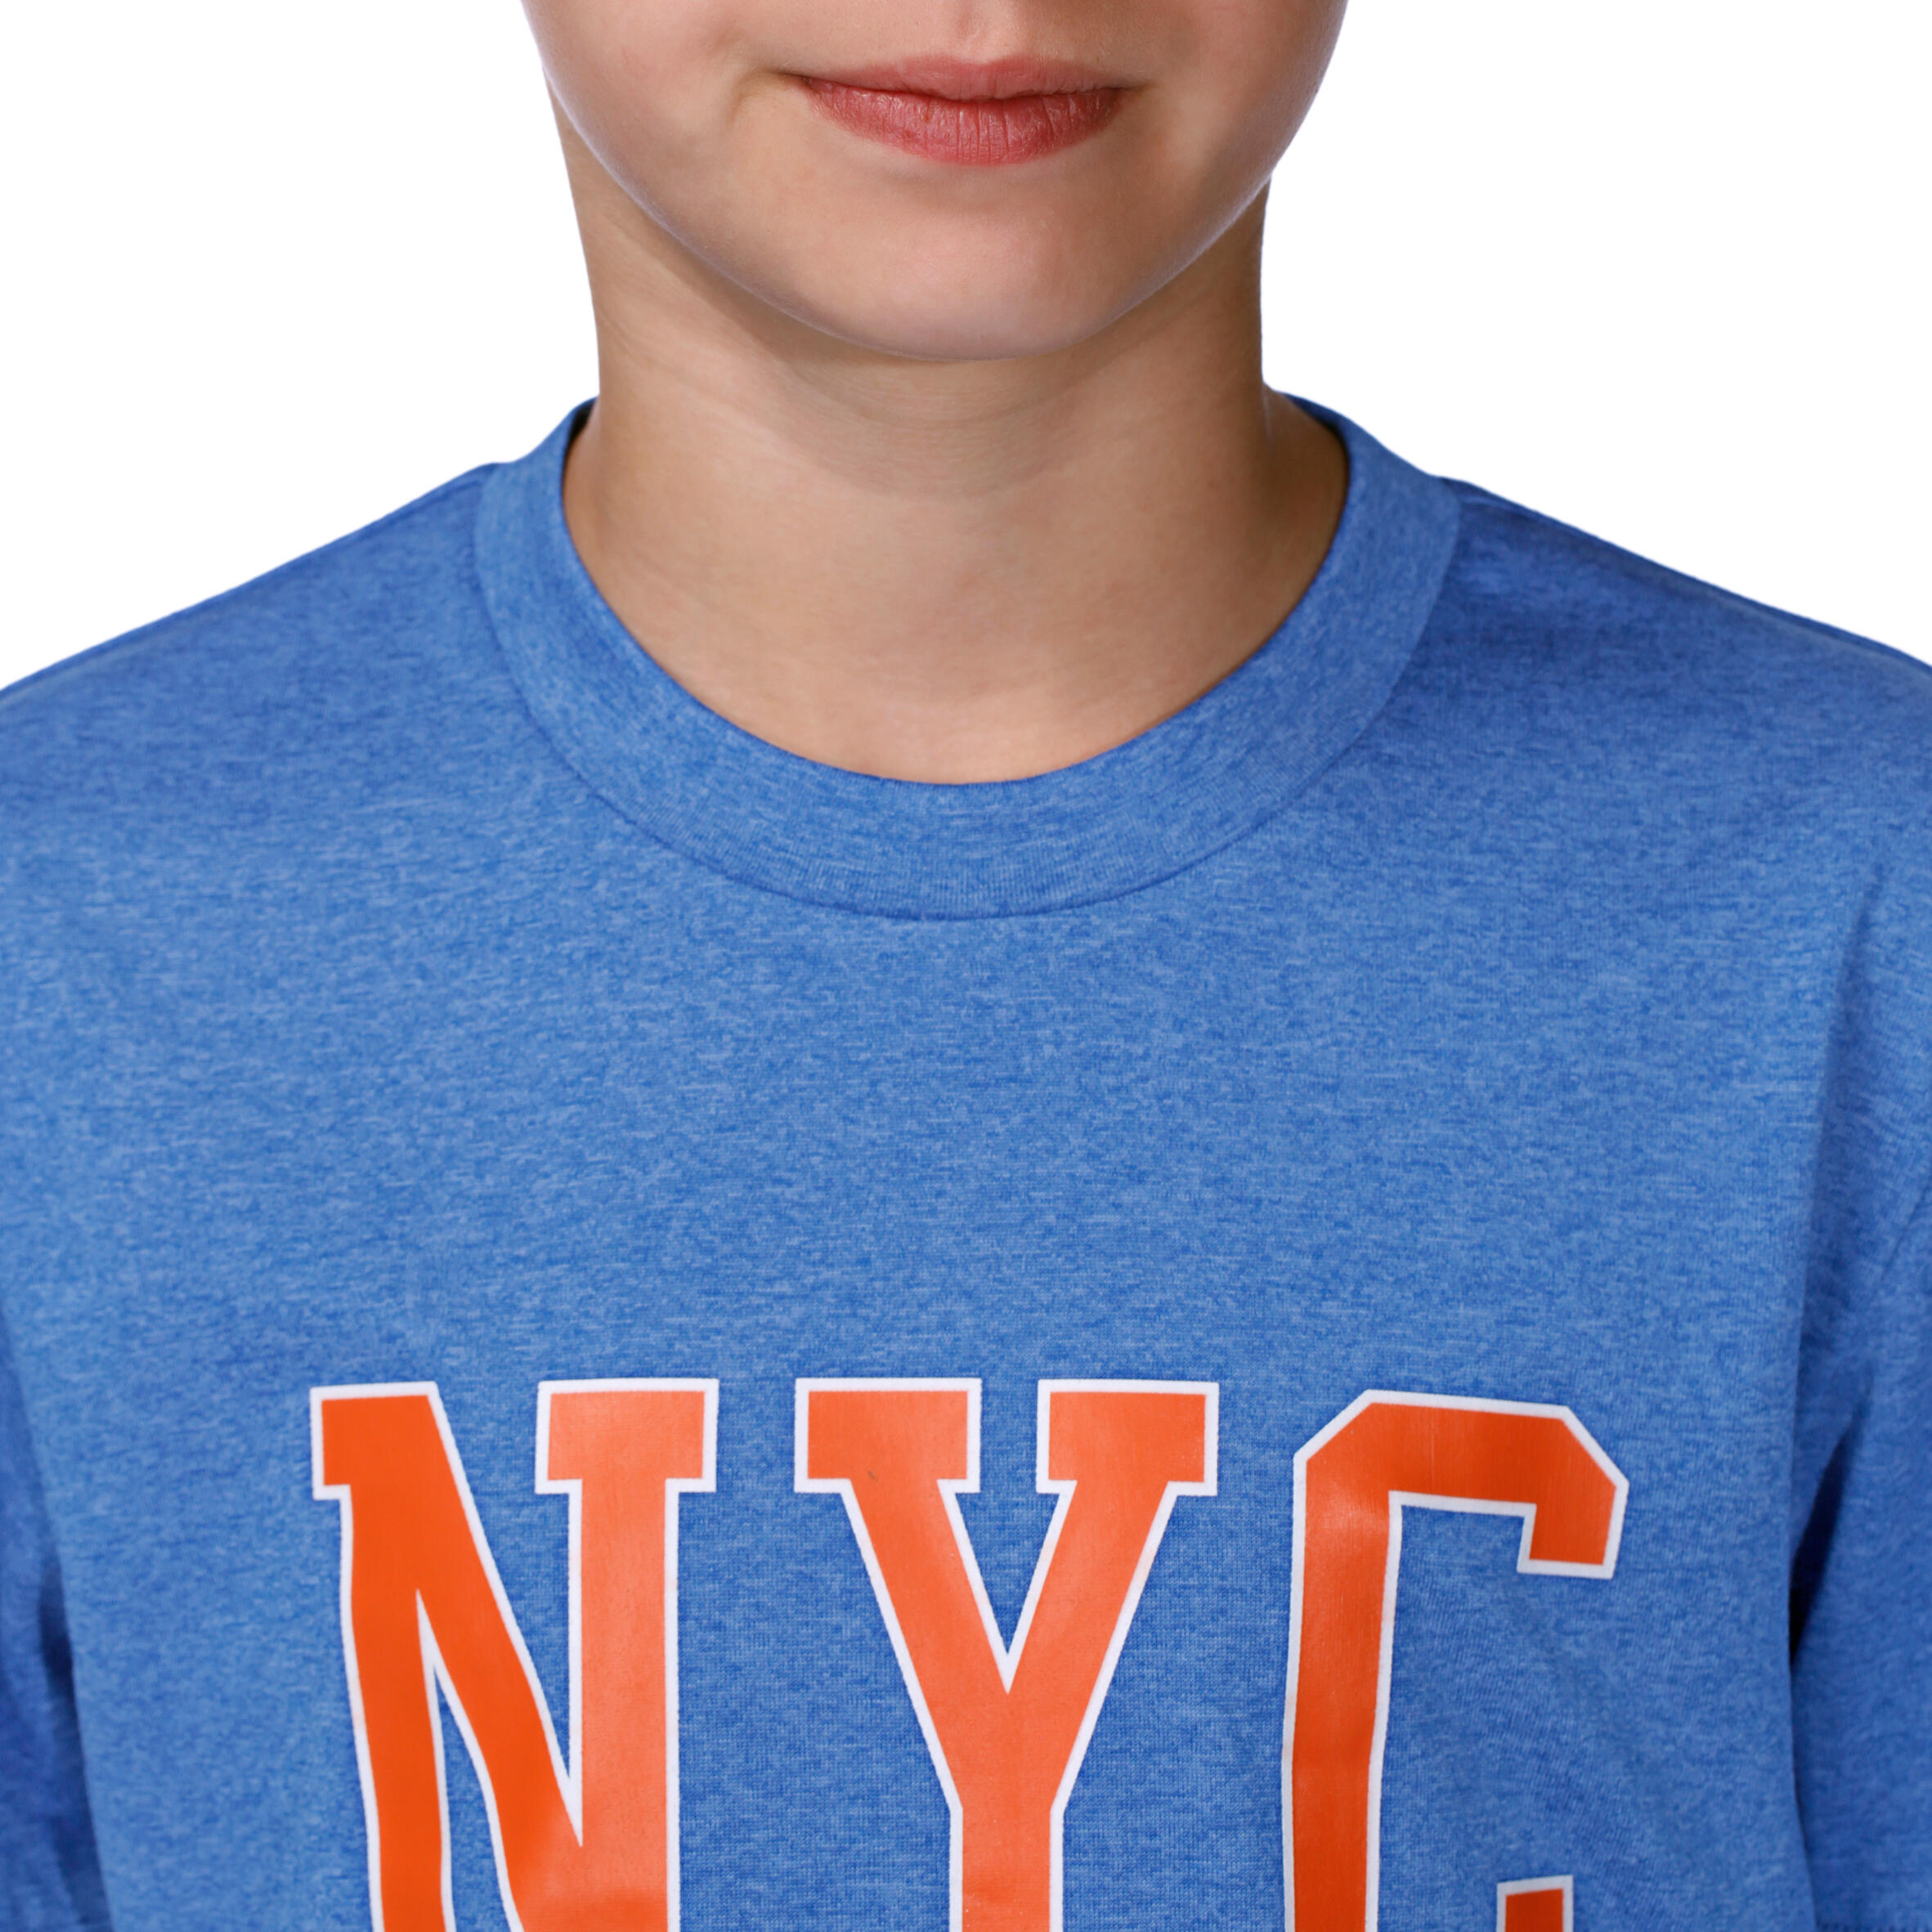 Fast NYC Kids Basketball T-Shirt - Blue 6/14